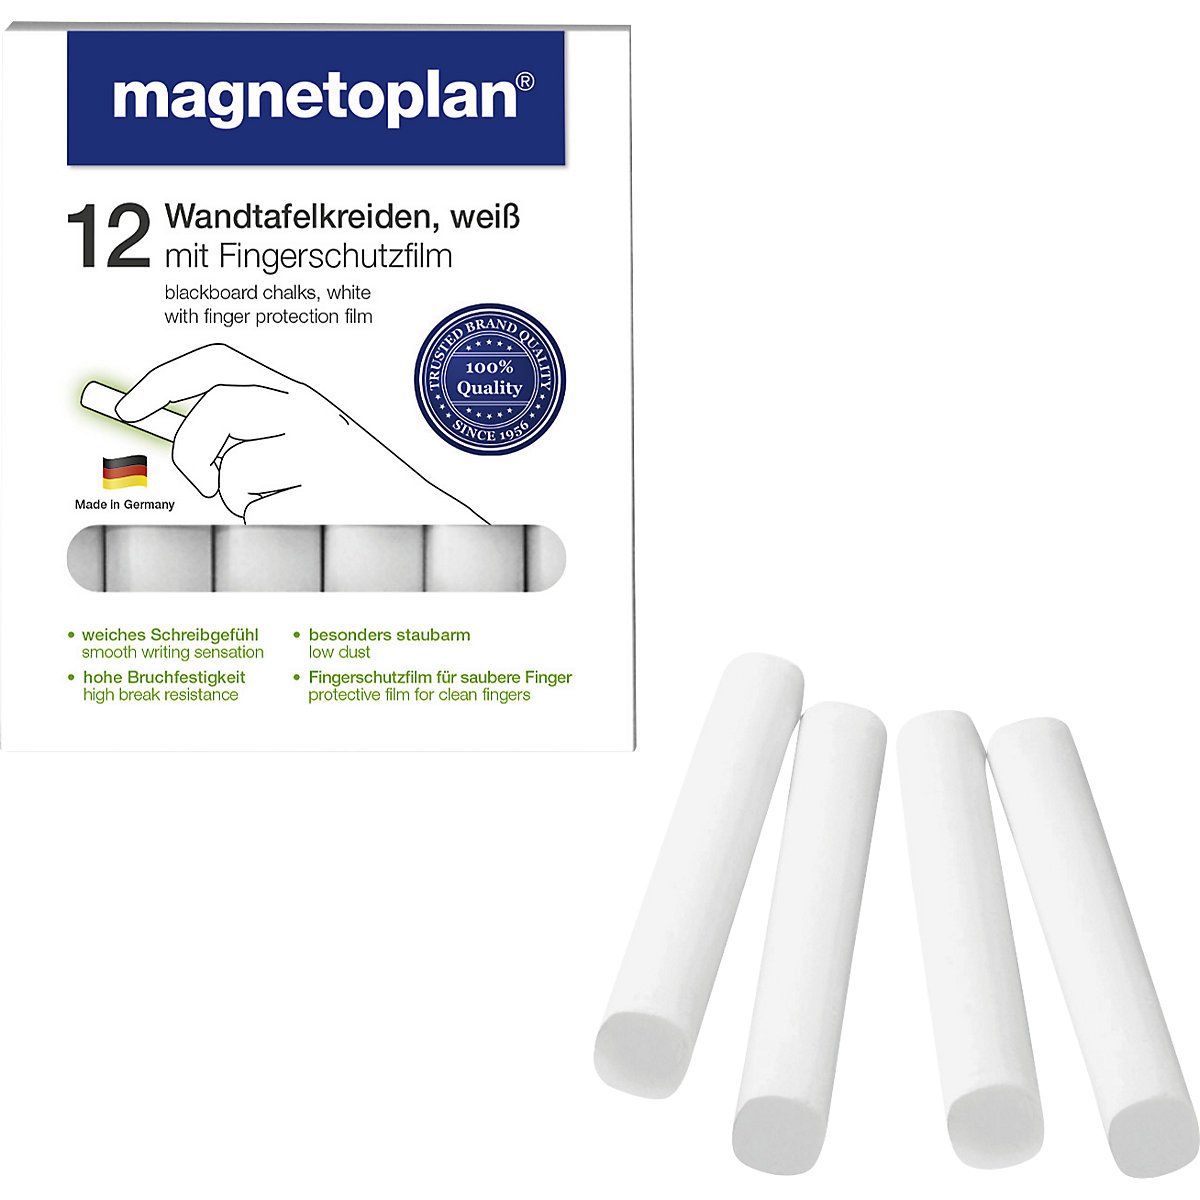 Giz – magnetoplan, arredondado, branco, embalagem de 288 unidades-1